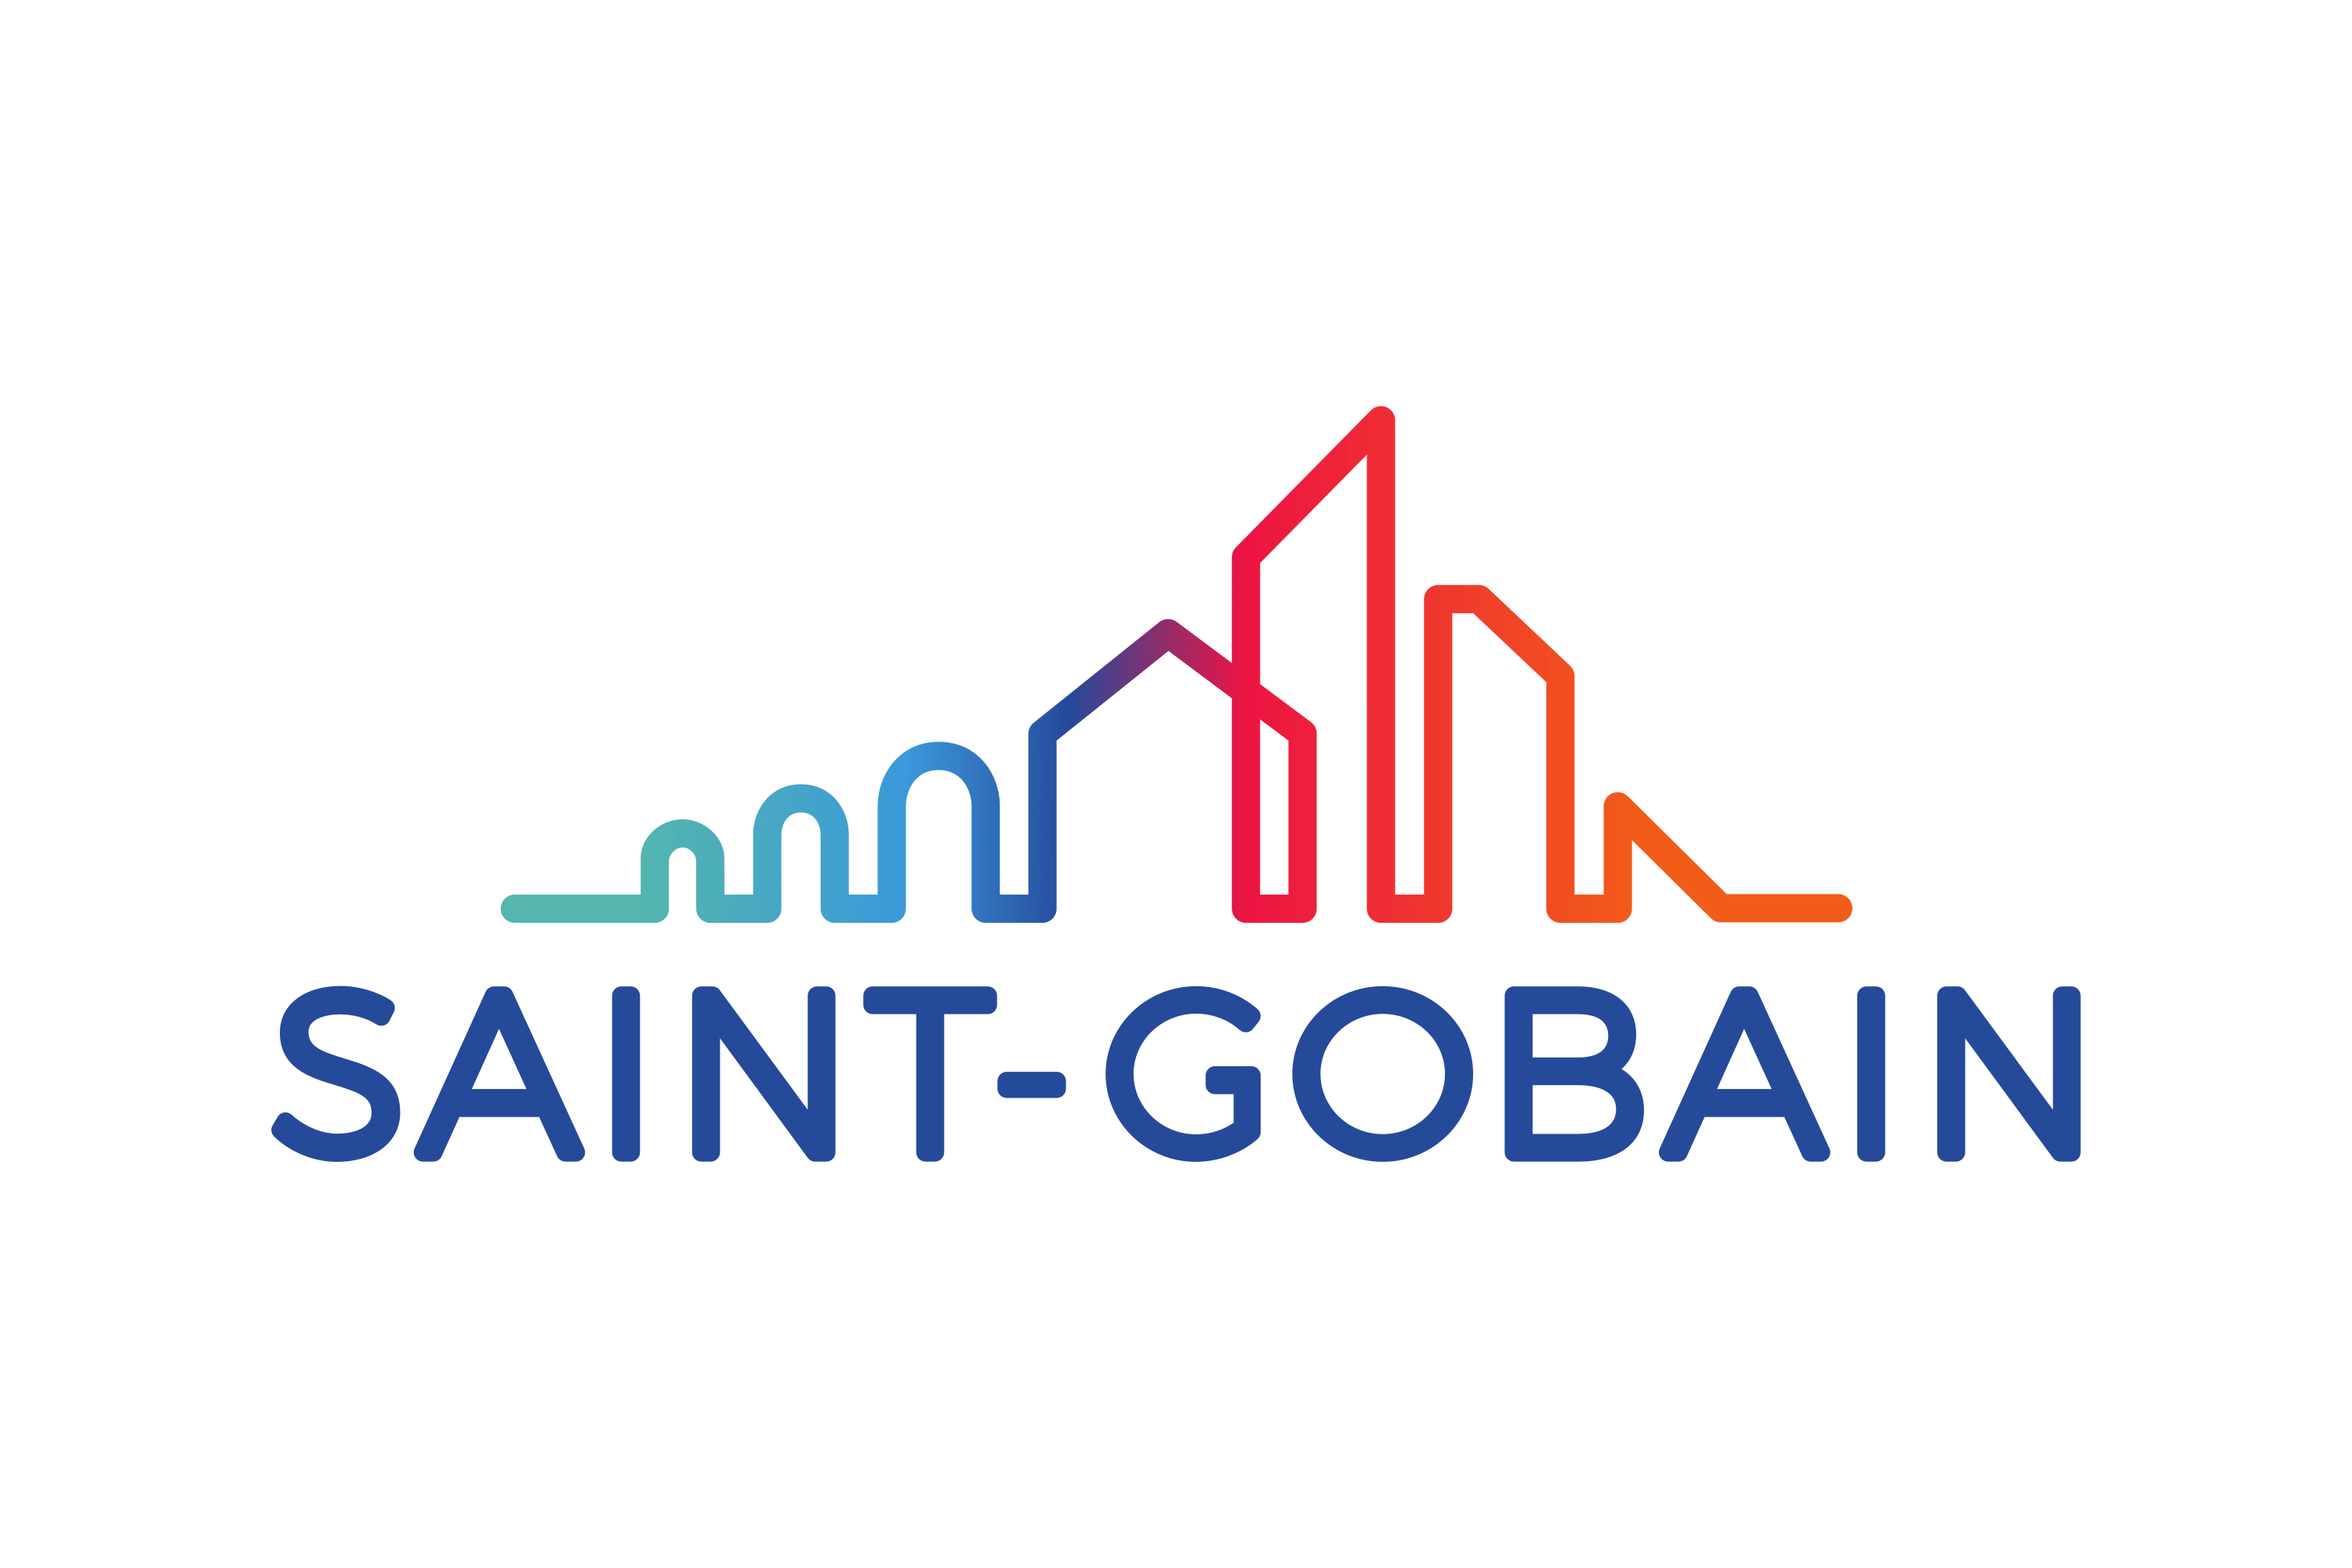 Download Saint-Gobain Logo in SVG Vector or PNG File Format - Logo.wine